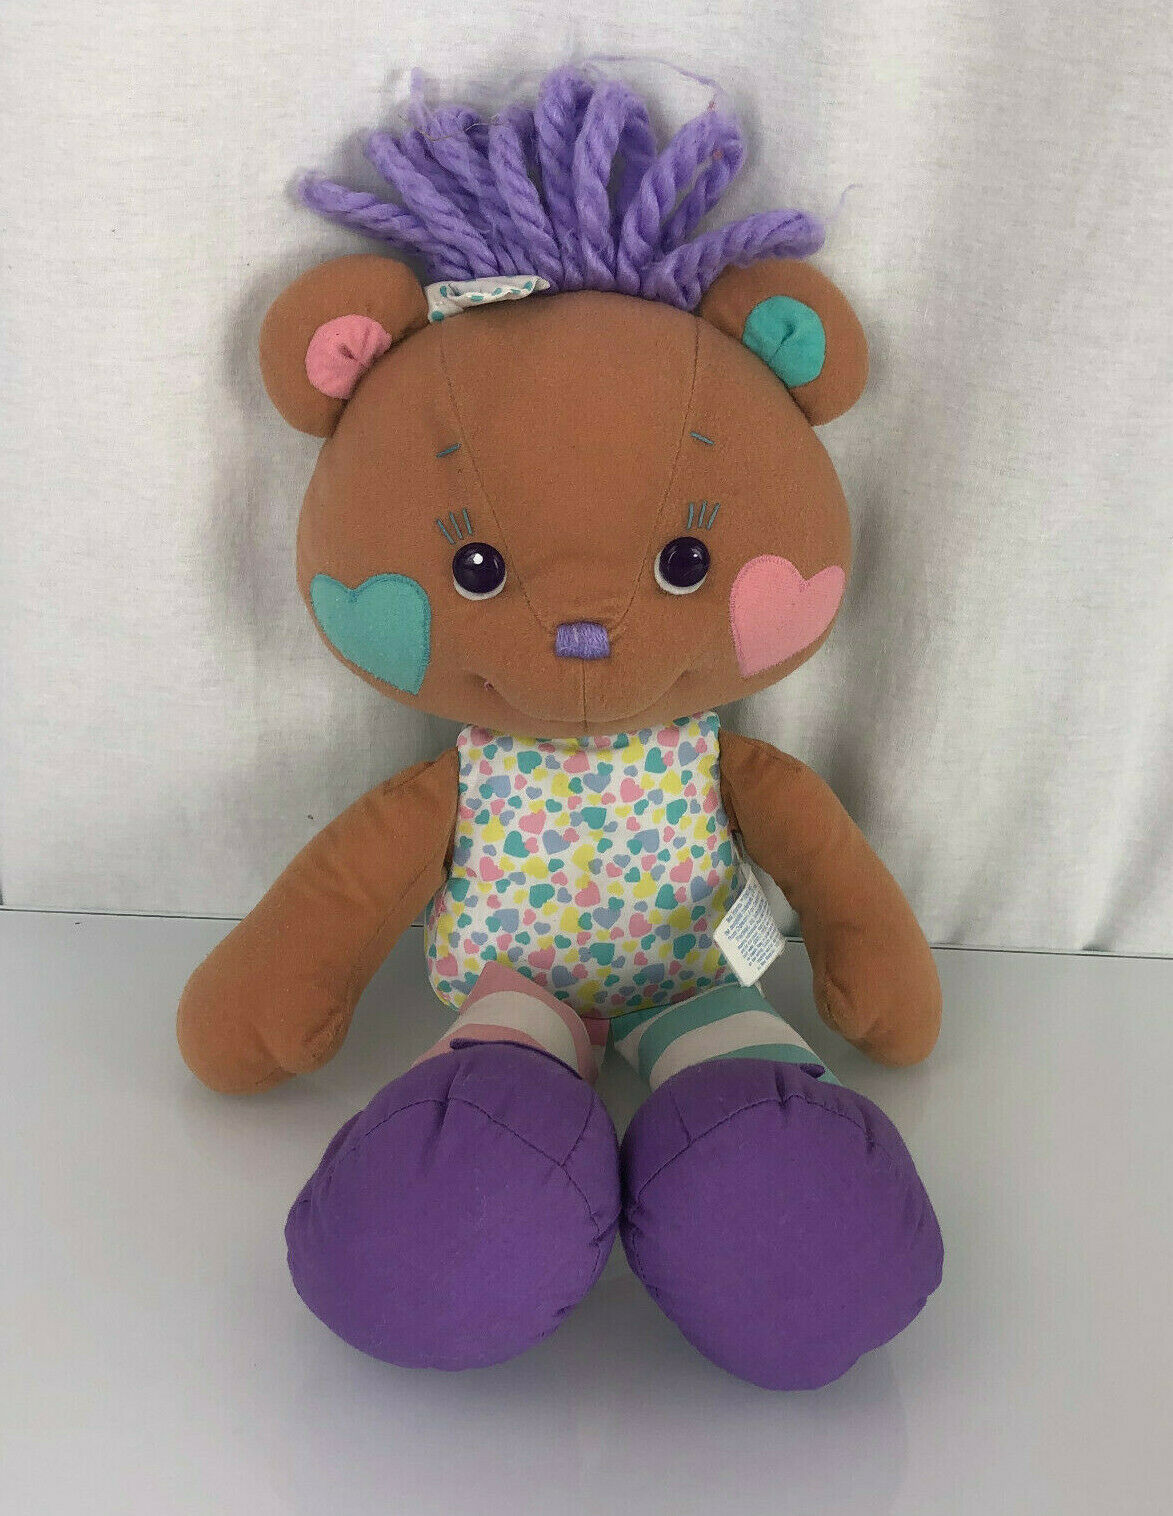 Playskool Bear Friends Stuffed Plush Teddy 1988 You're Very Pretty Heart - $79.19